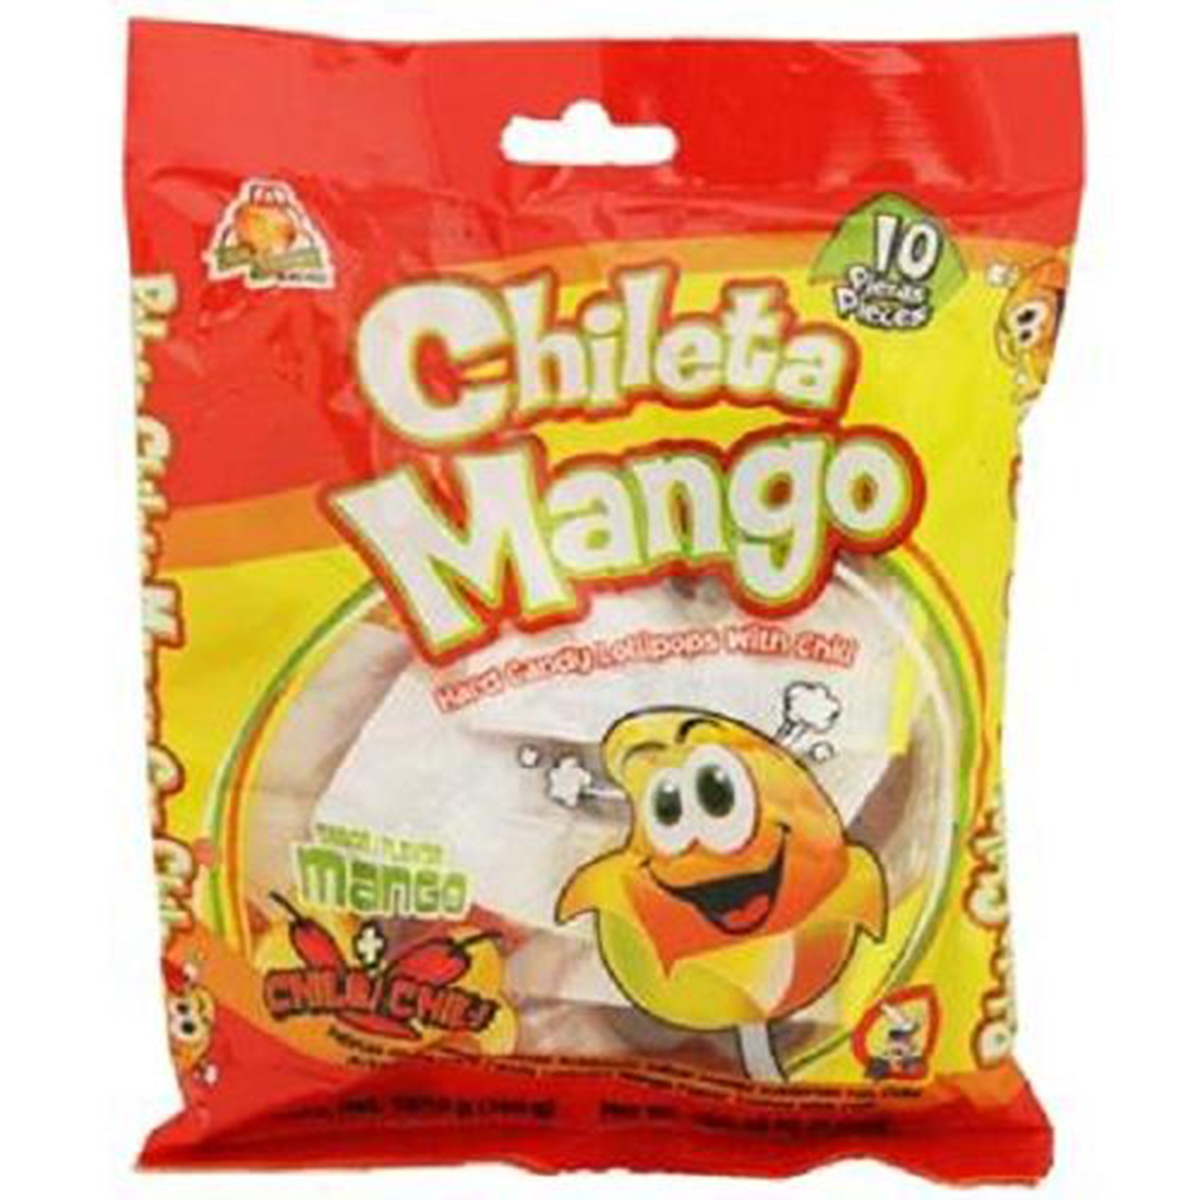 El Azteca Chileta Lollipops Mango W/Chili - 5.6 oz bag - image 1 of 1